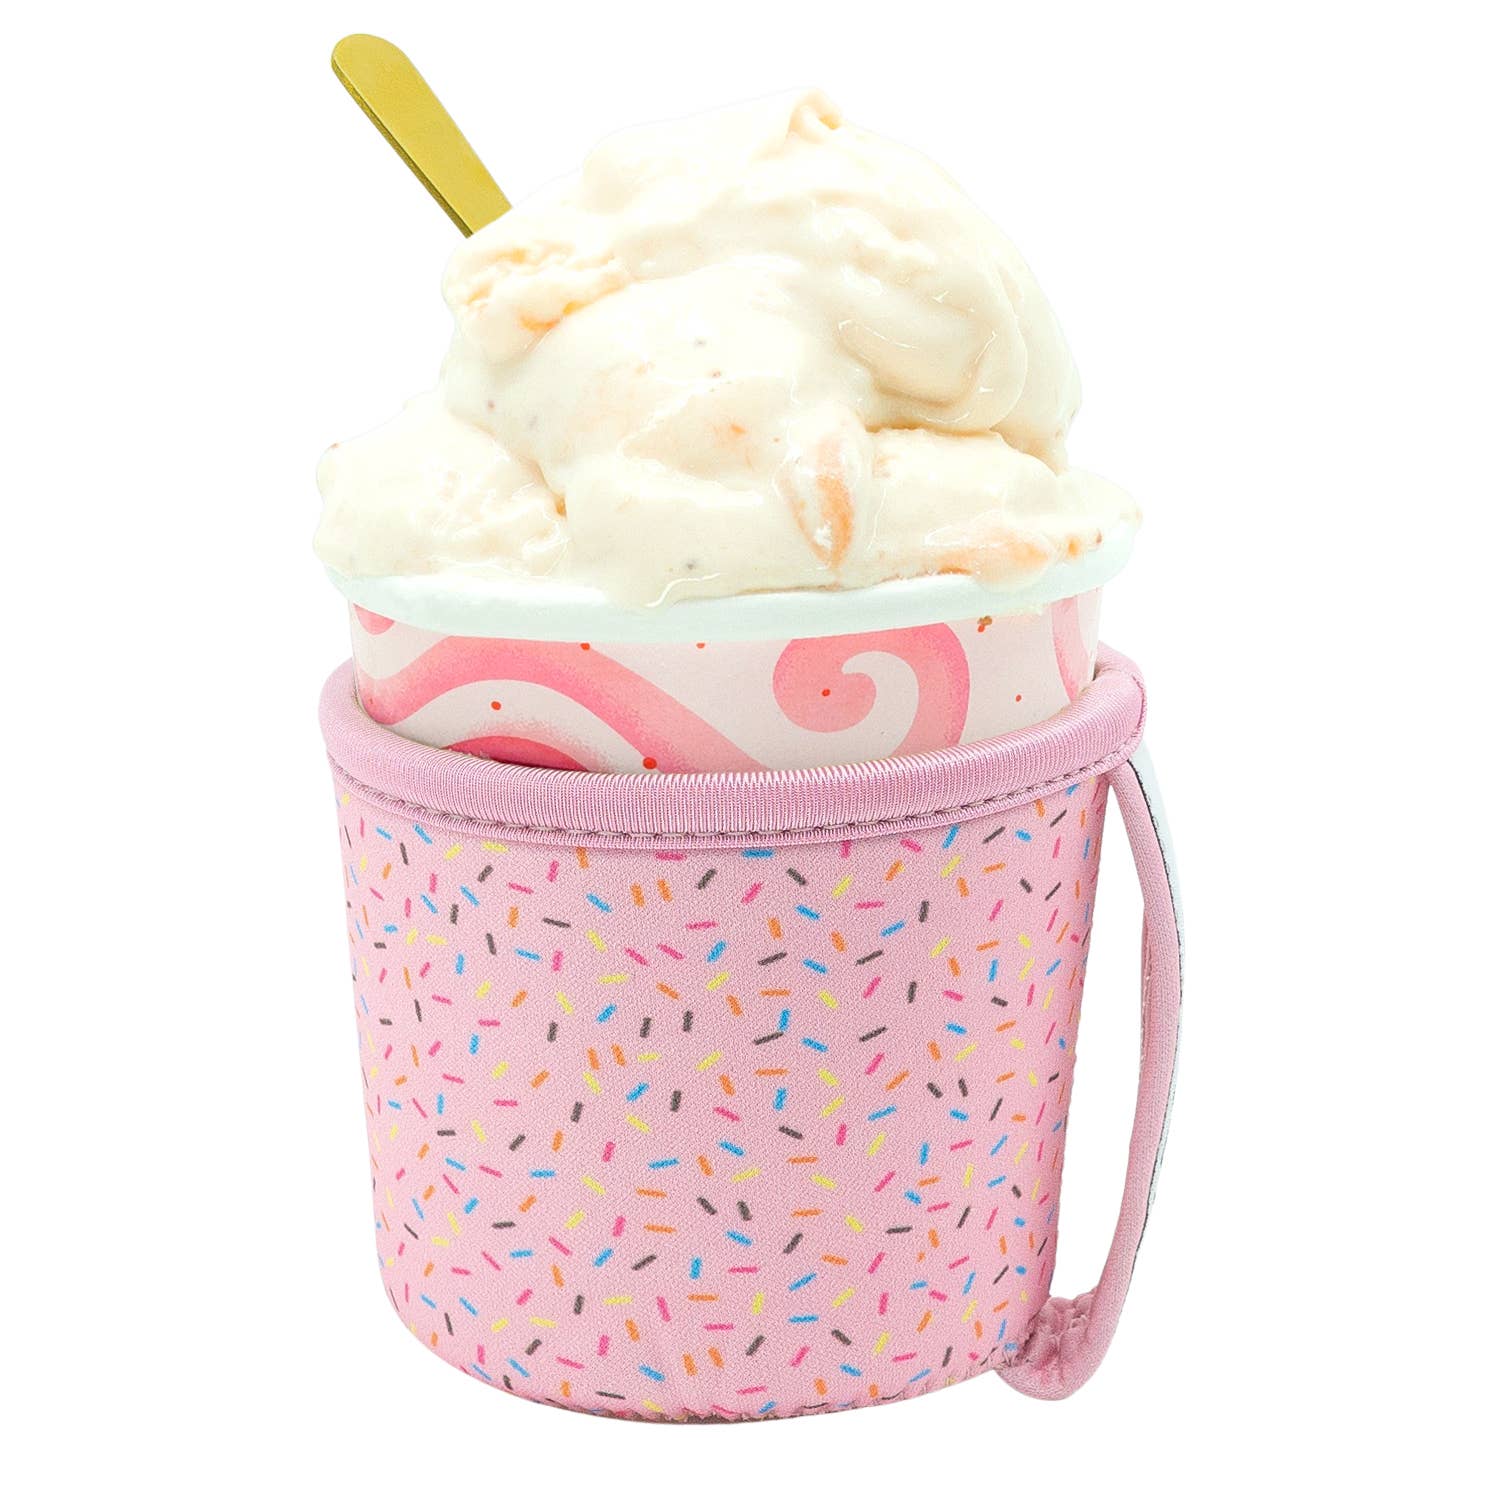 Introducingthe S'well Ice Cream Pint Cooler Bowl!